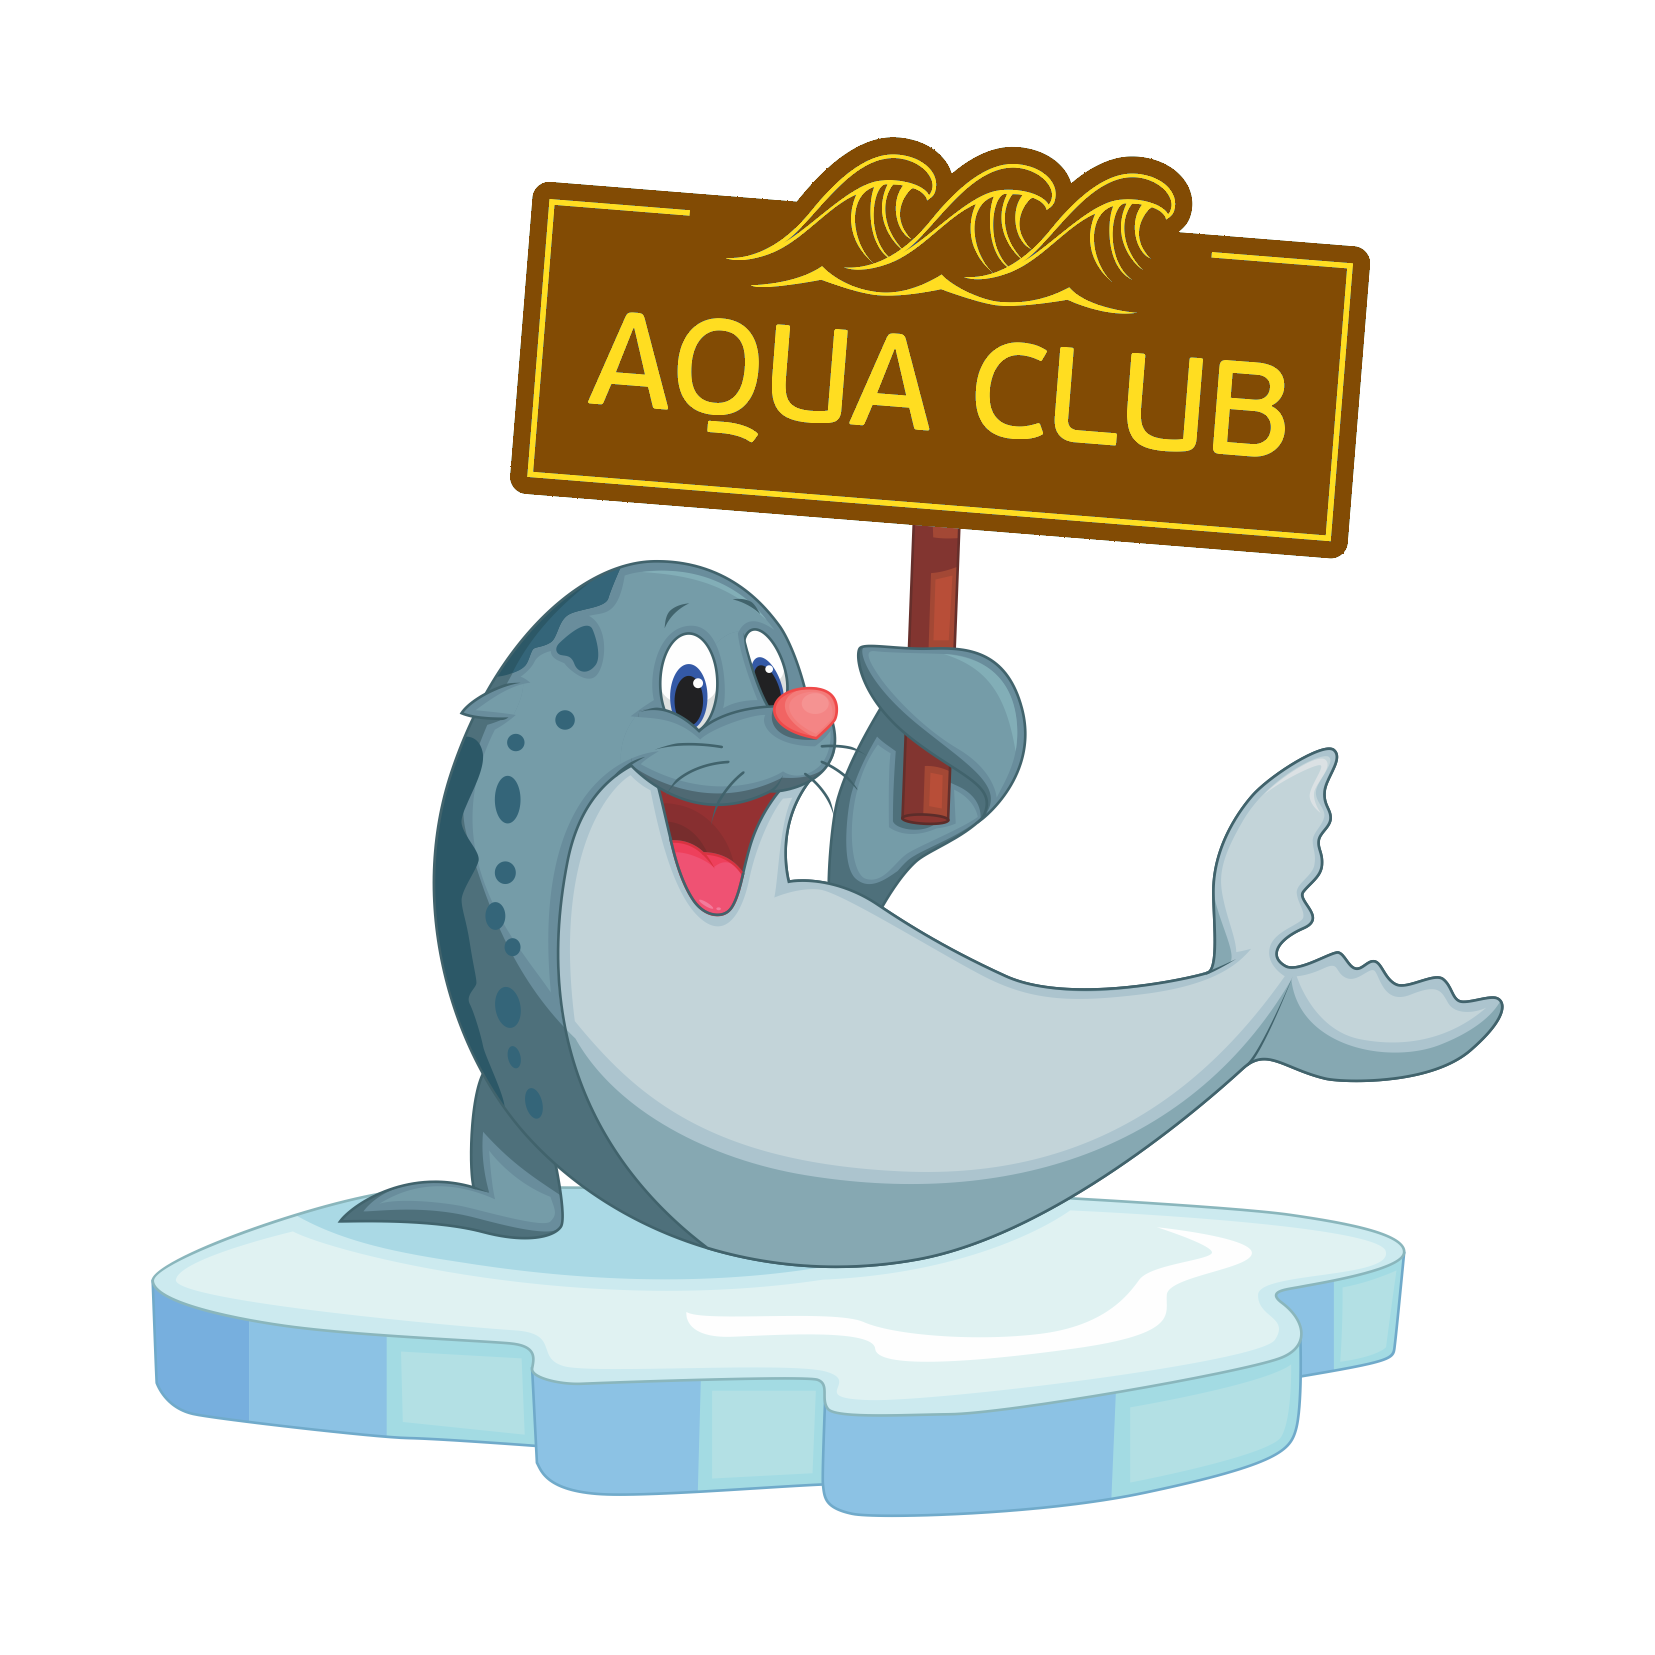 Aqua Club logo